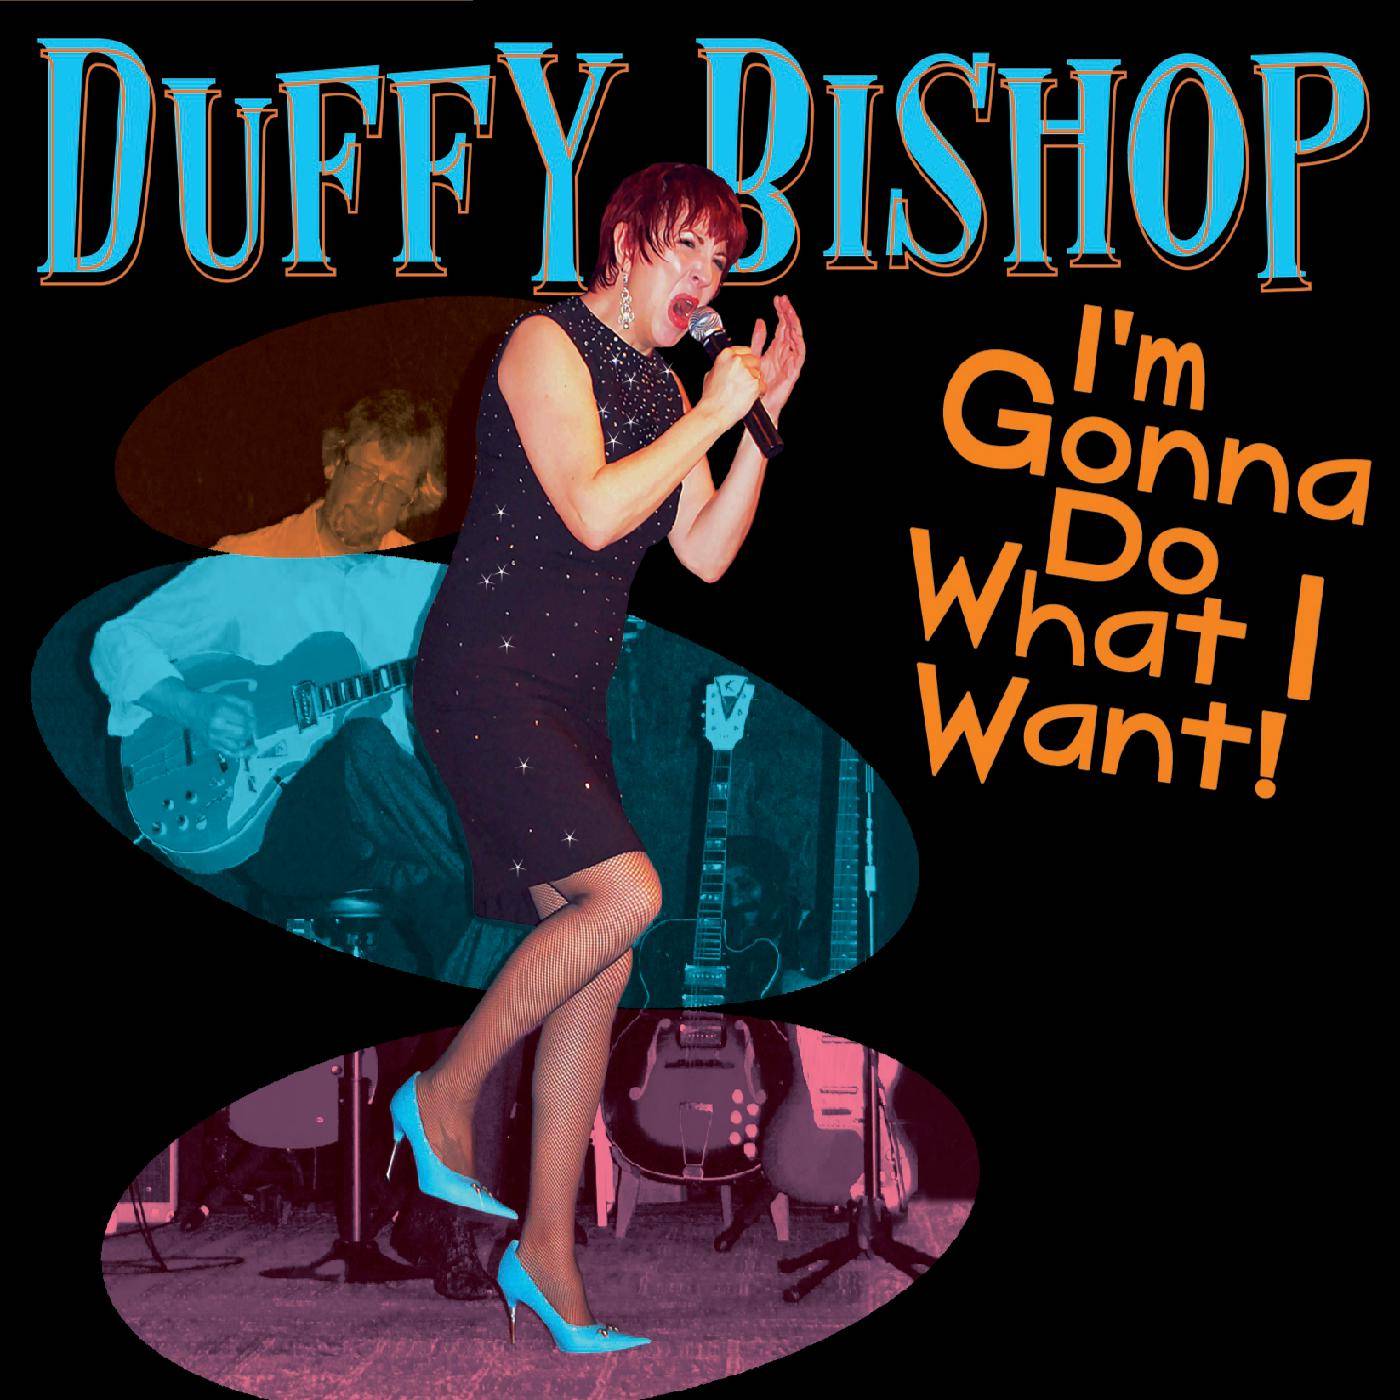 Duffy-Bishop-Im-Gonna-Do-What-I-Want-